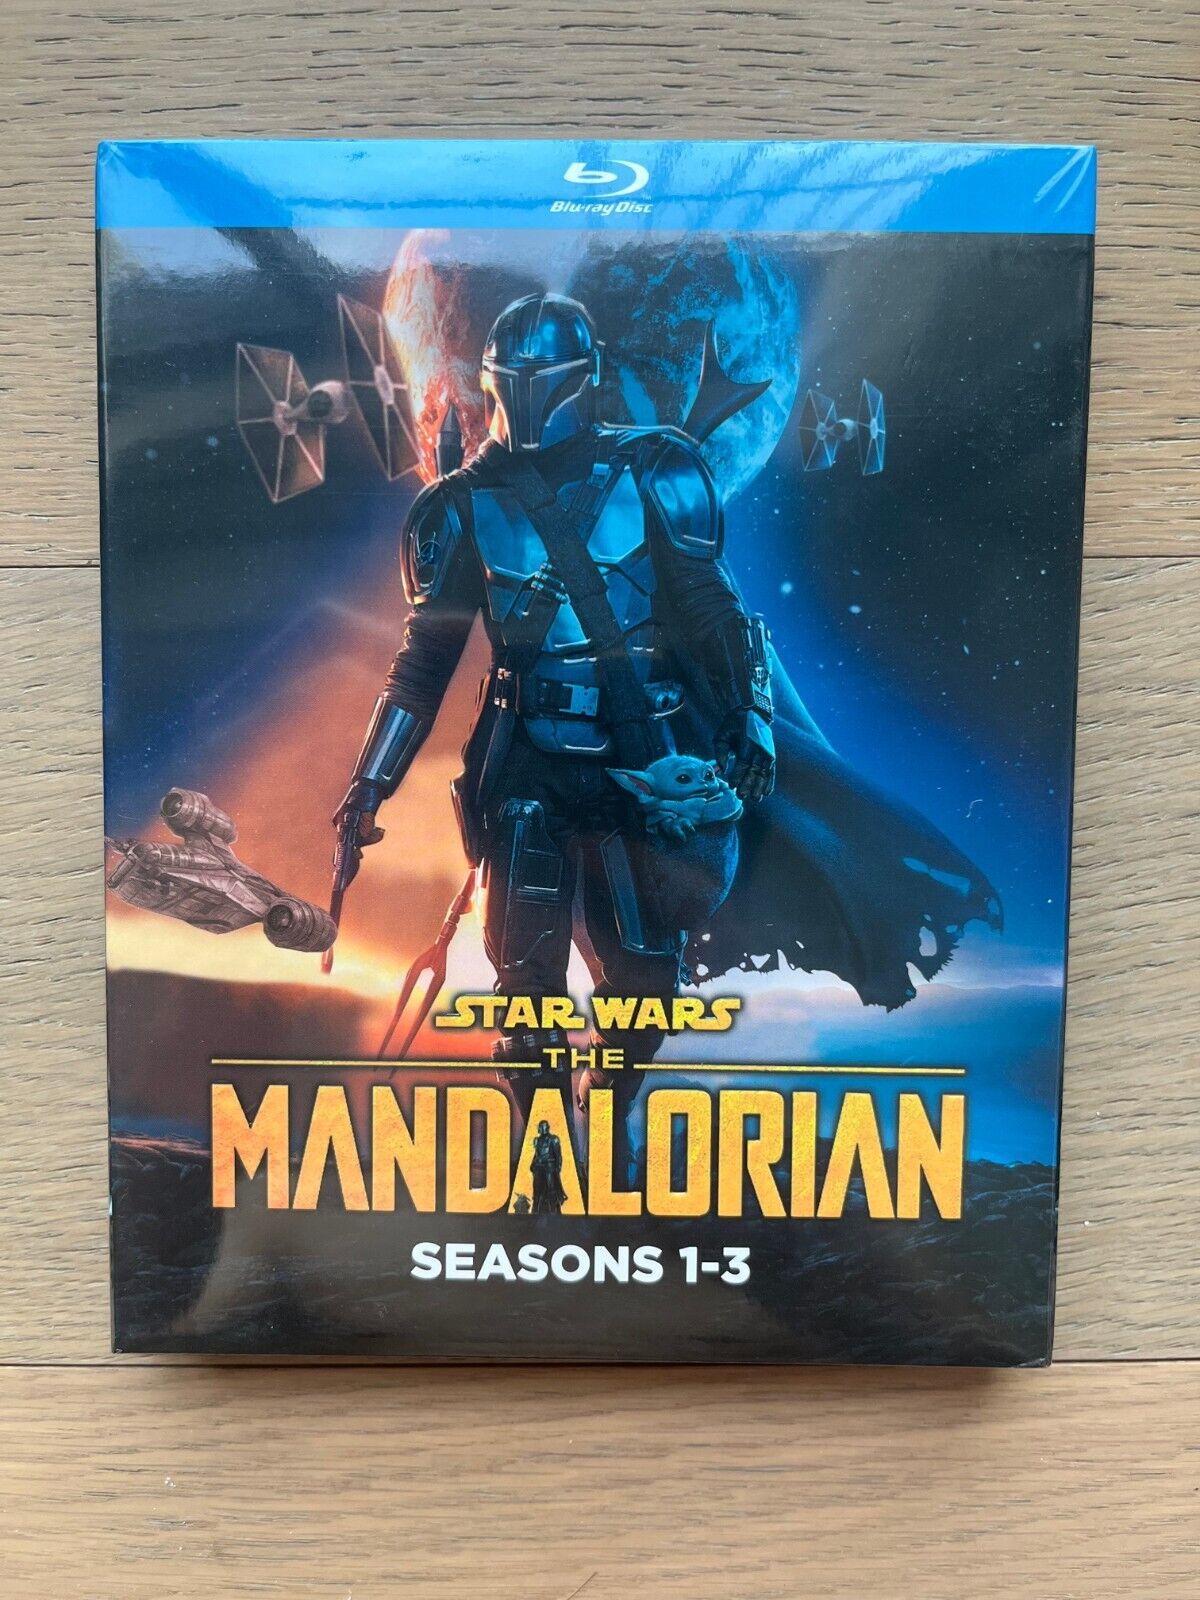 THE MANDALORIAN: The Complete Series Season 1-3 on Blu-Ray region 0